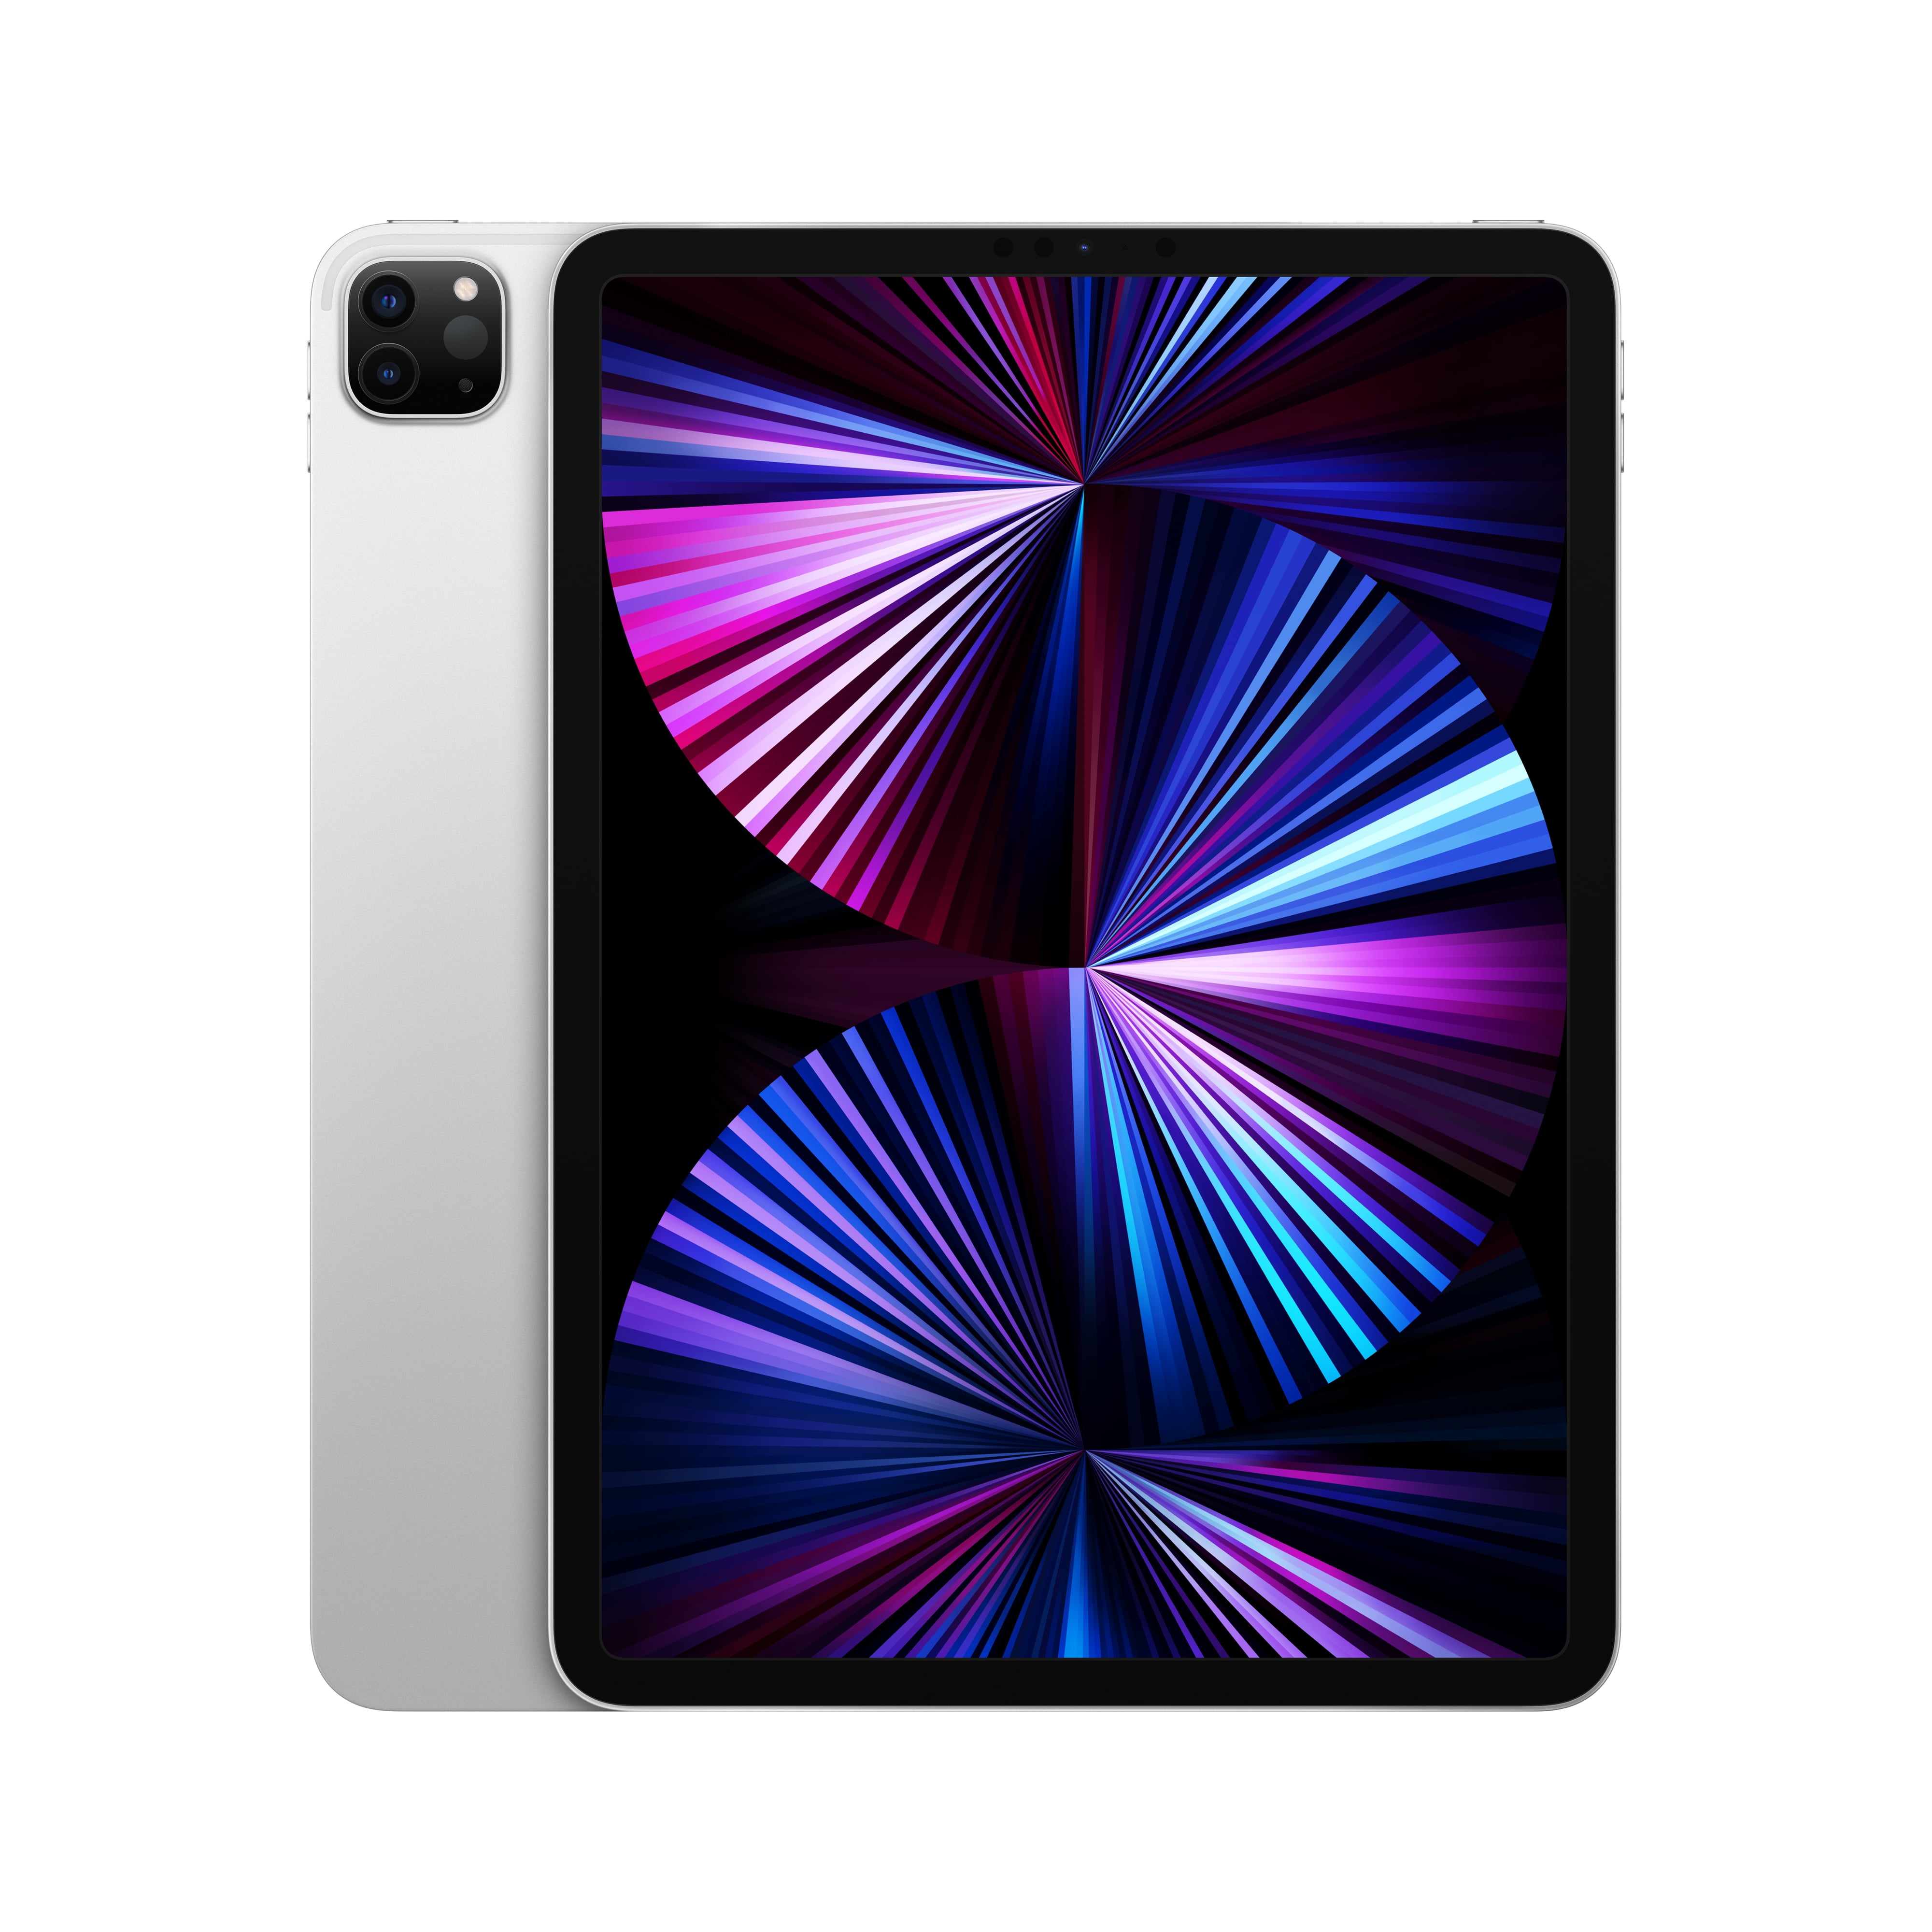 Apple 11-inch iPad Pro (2021) Wi-Fi 256GB - Space Gray - Walmart.com